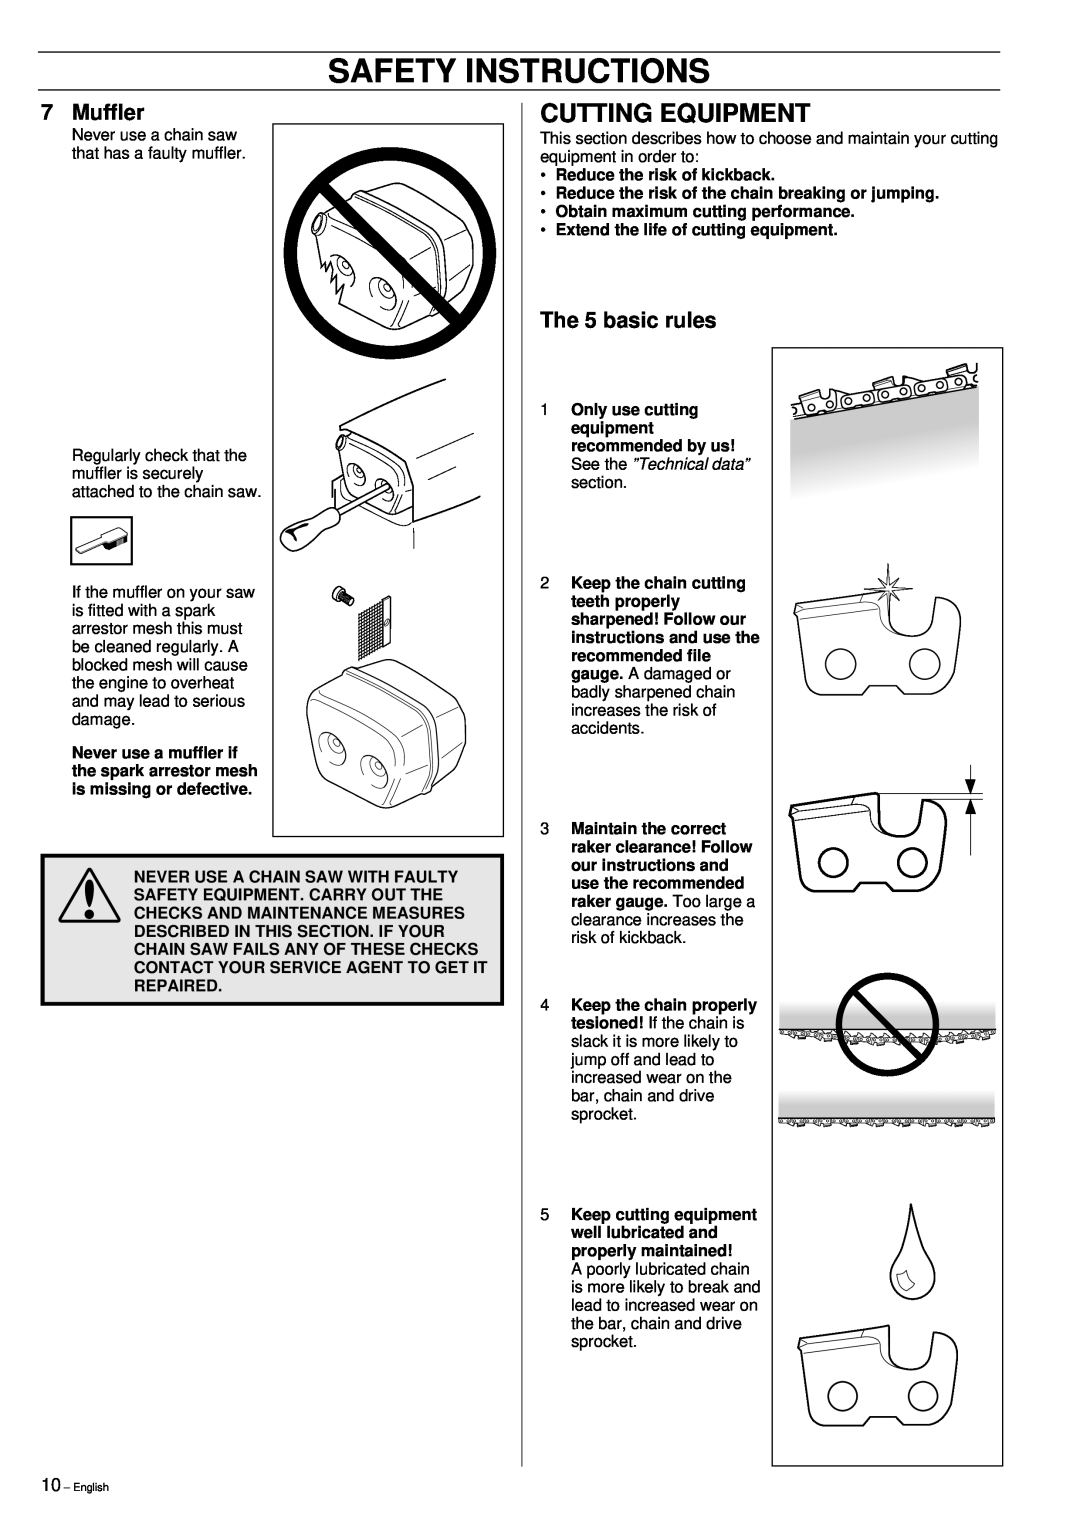 Husqvarna 61, 268, 272XP manual Cutting Equipment, The 5 basic rules, Safety Instructions, Muffler 